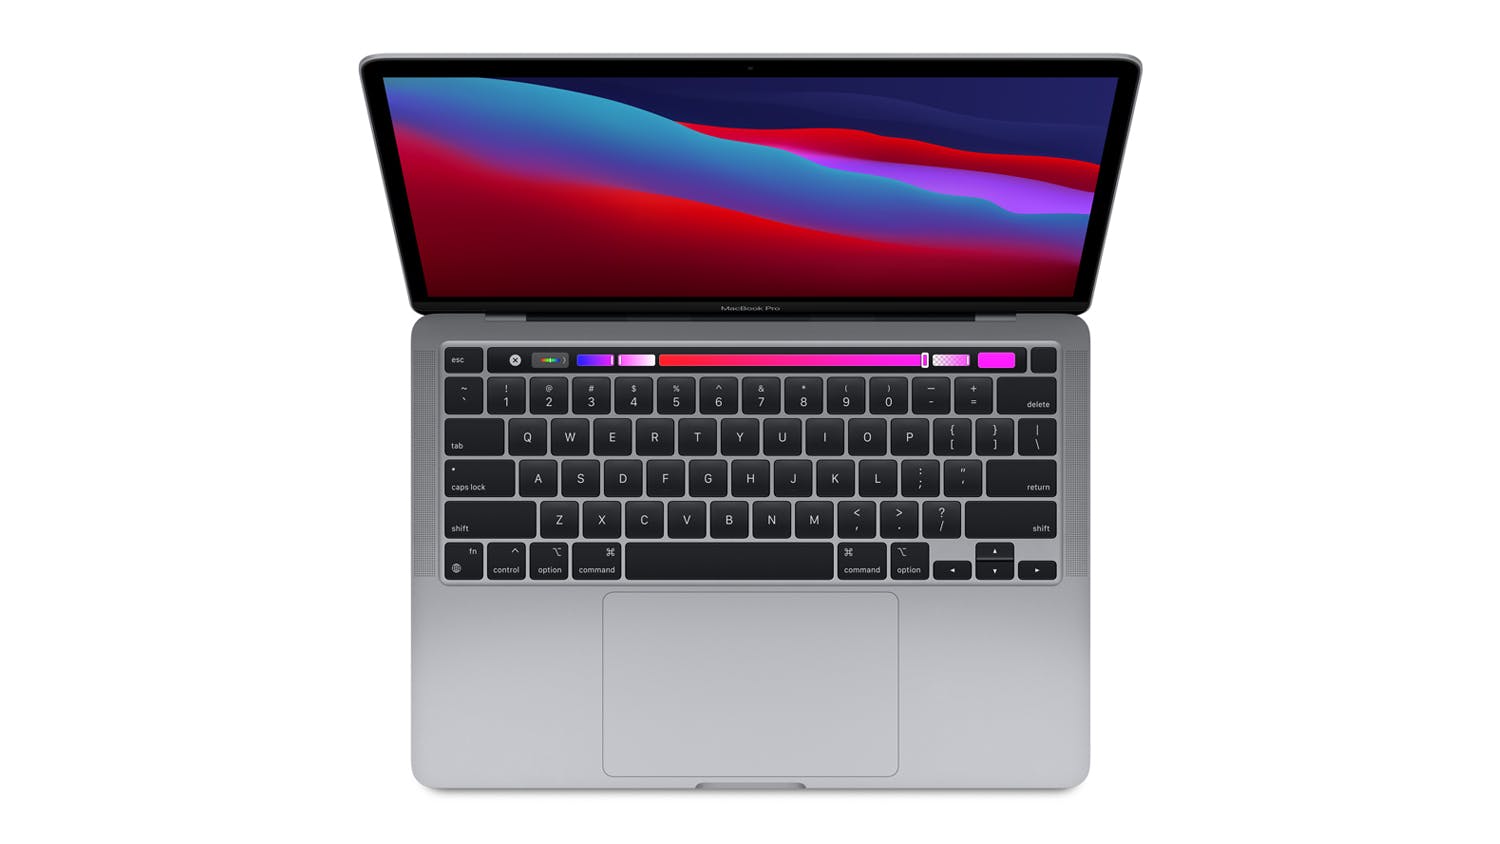 Apple MacBook Pro 13" M1 512GB - Space Grey (2020)